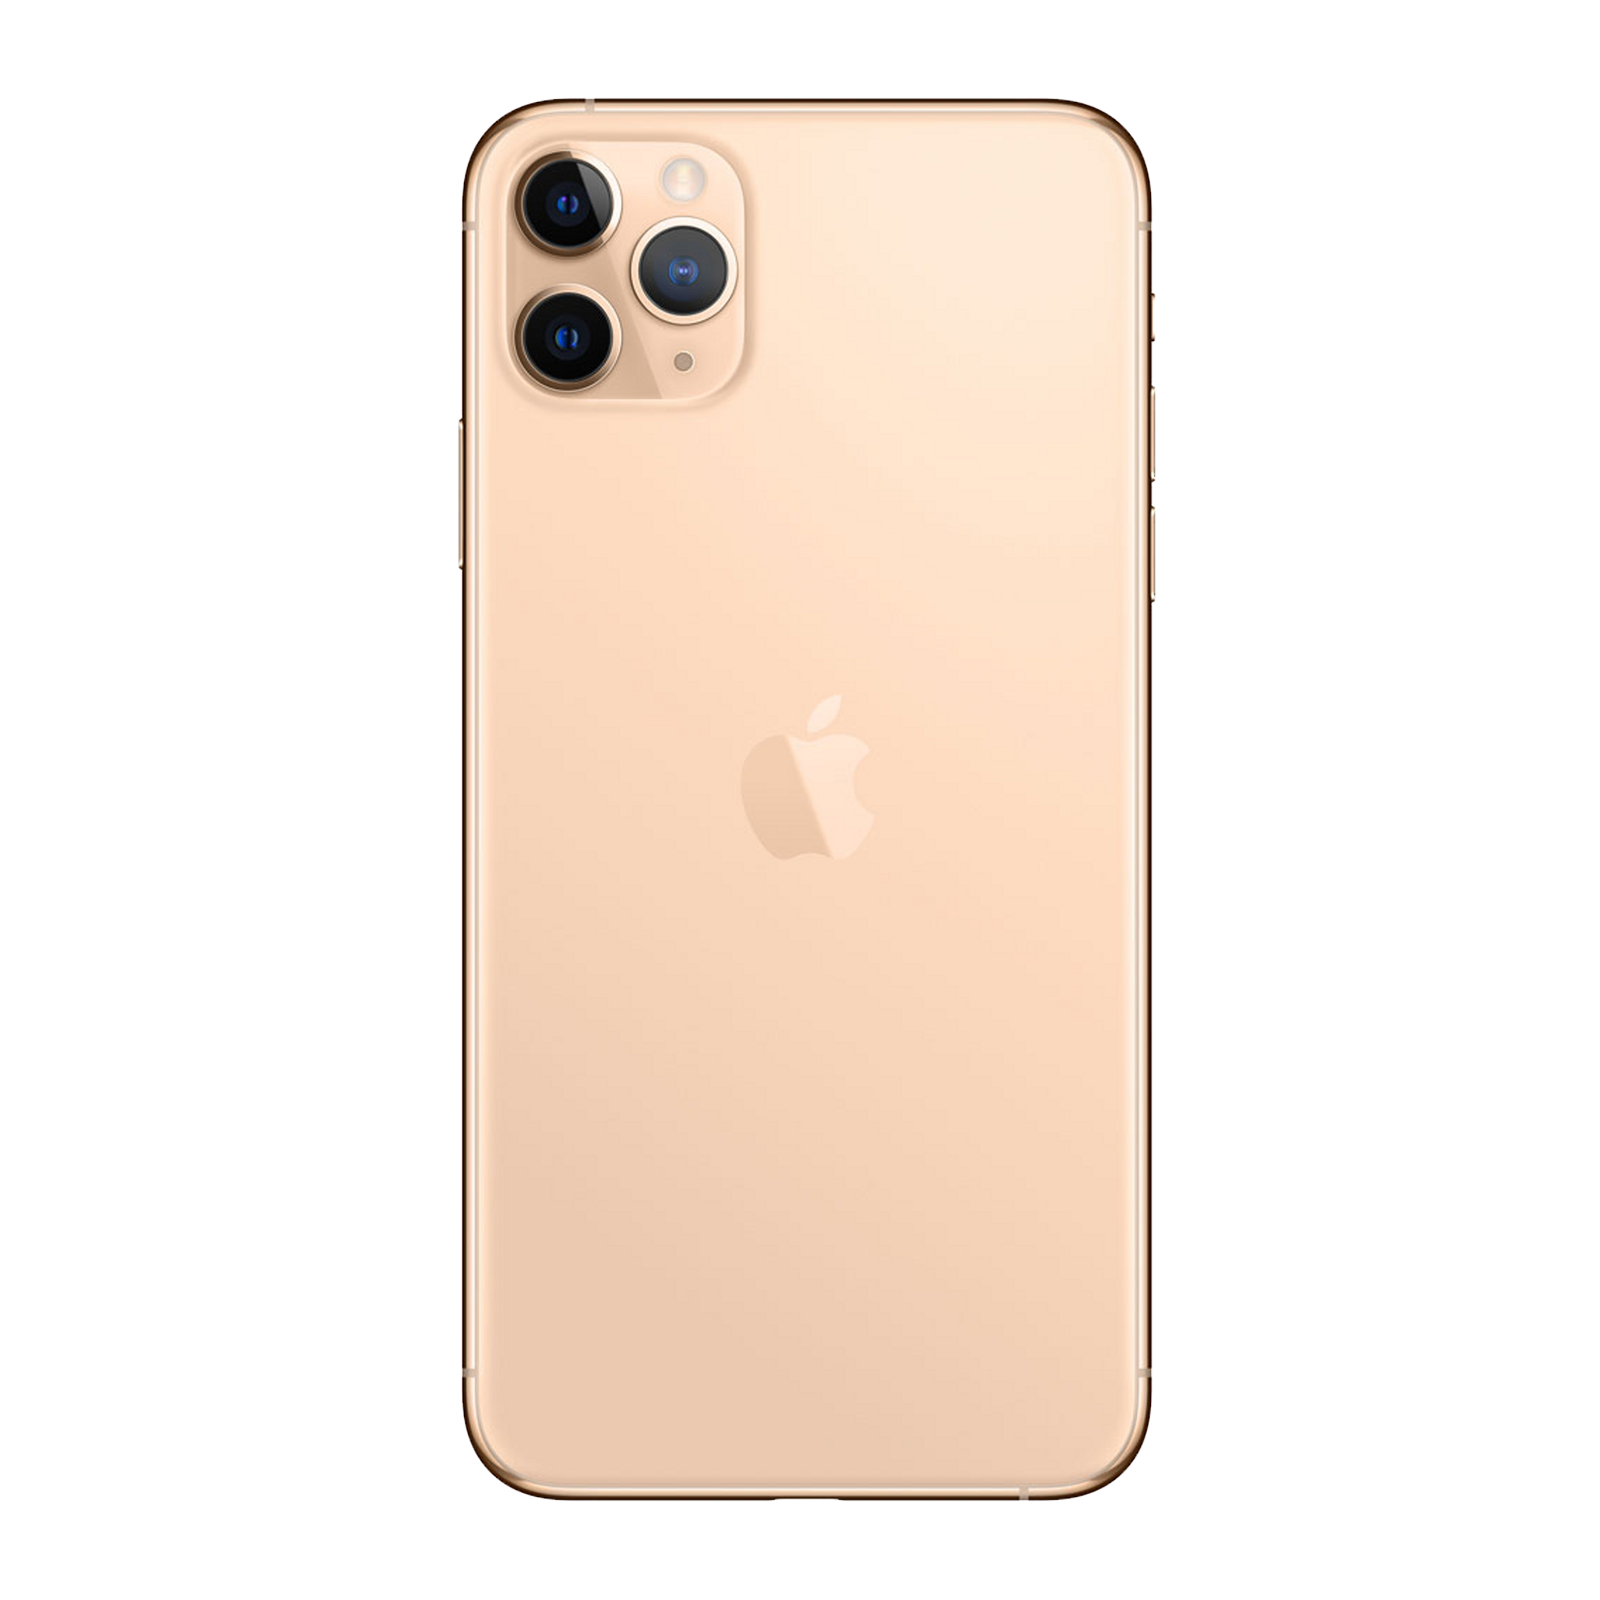 Apple iPhone 11 Pro Max 256GB Gold Fair - Unlocked